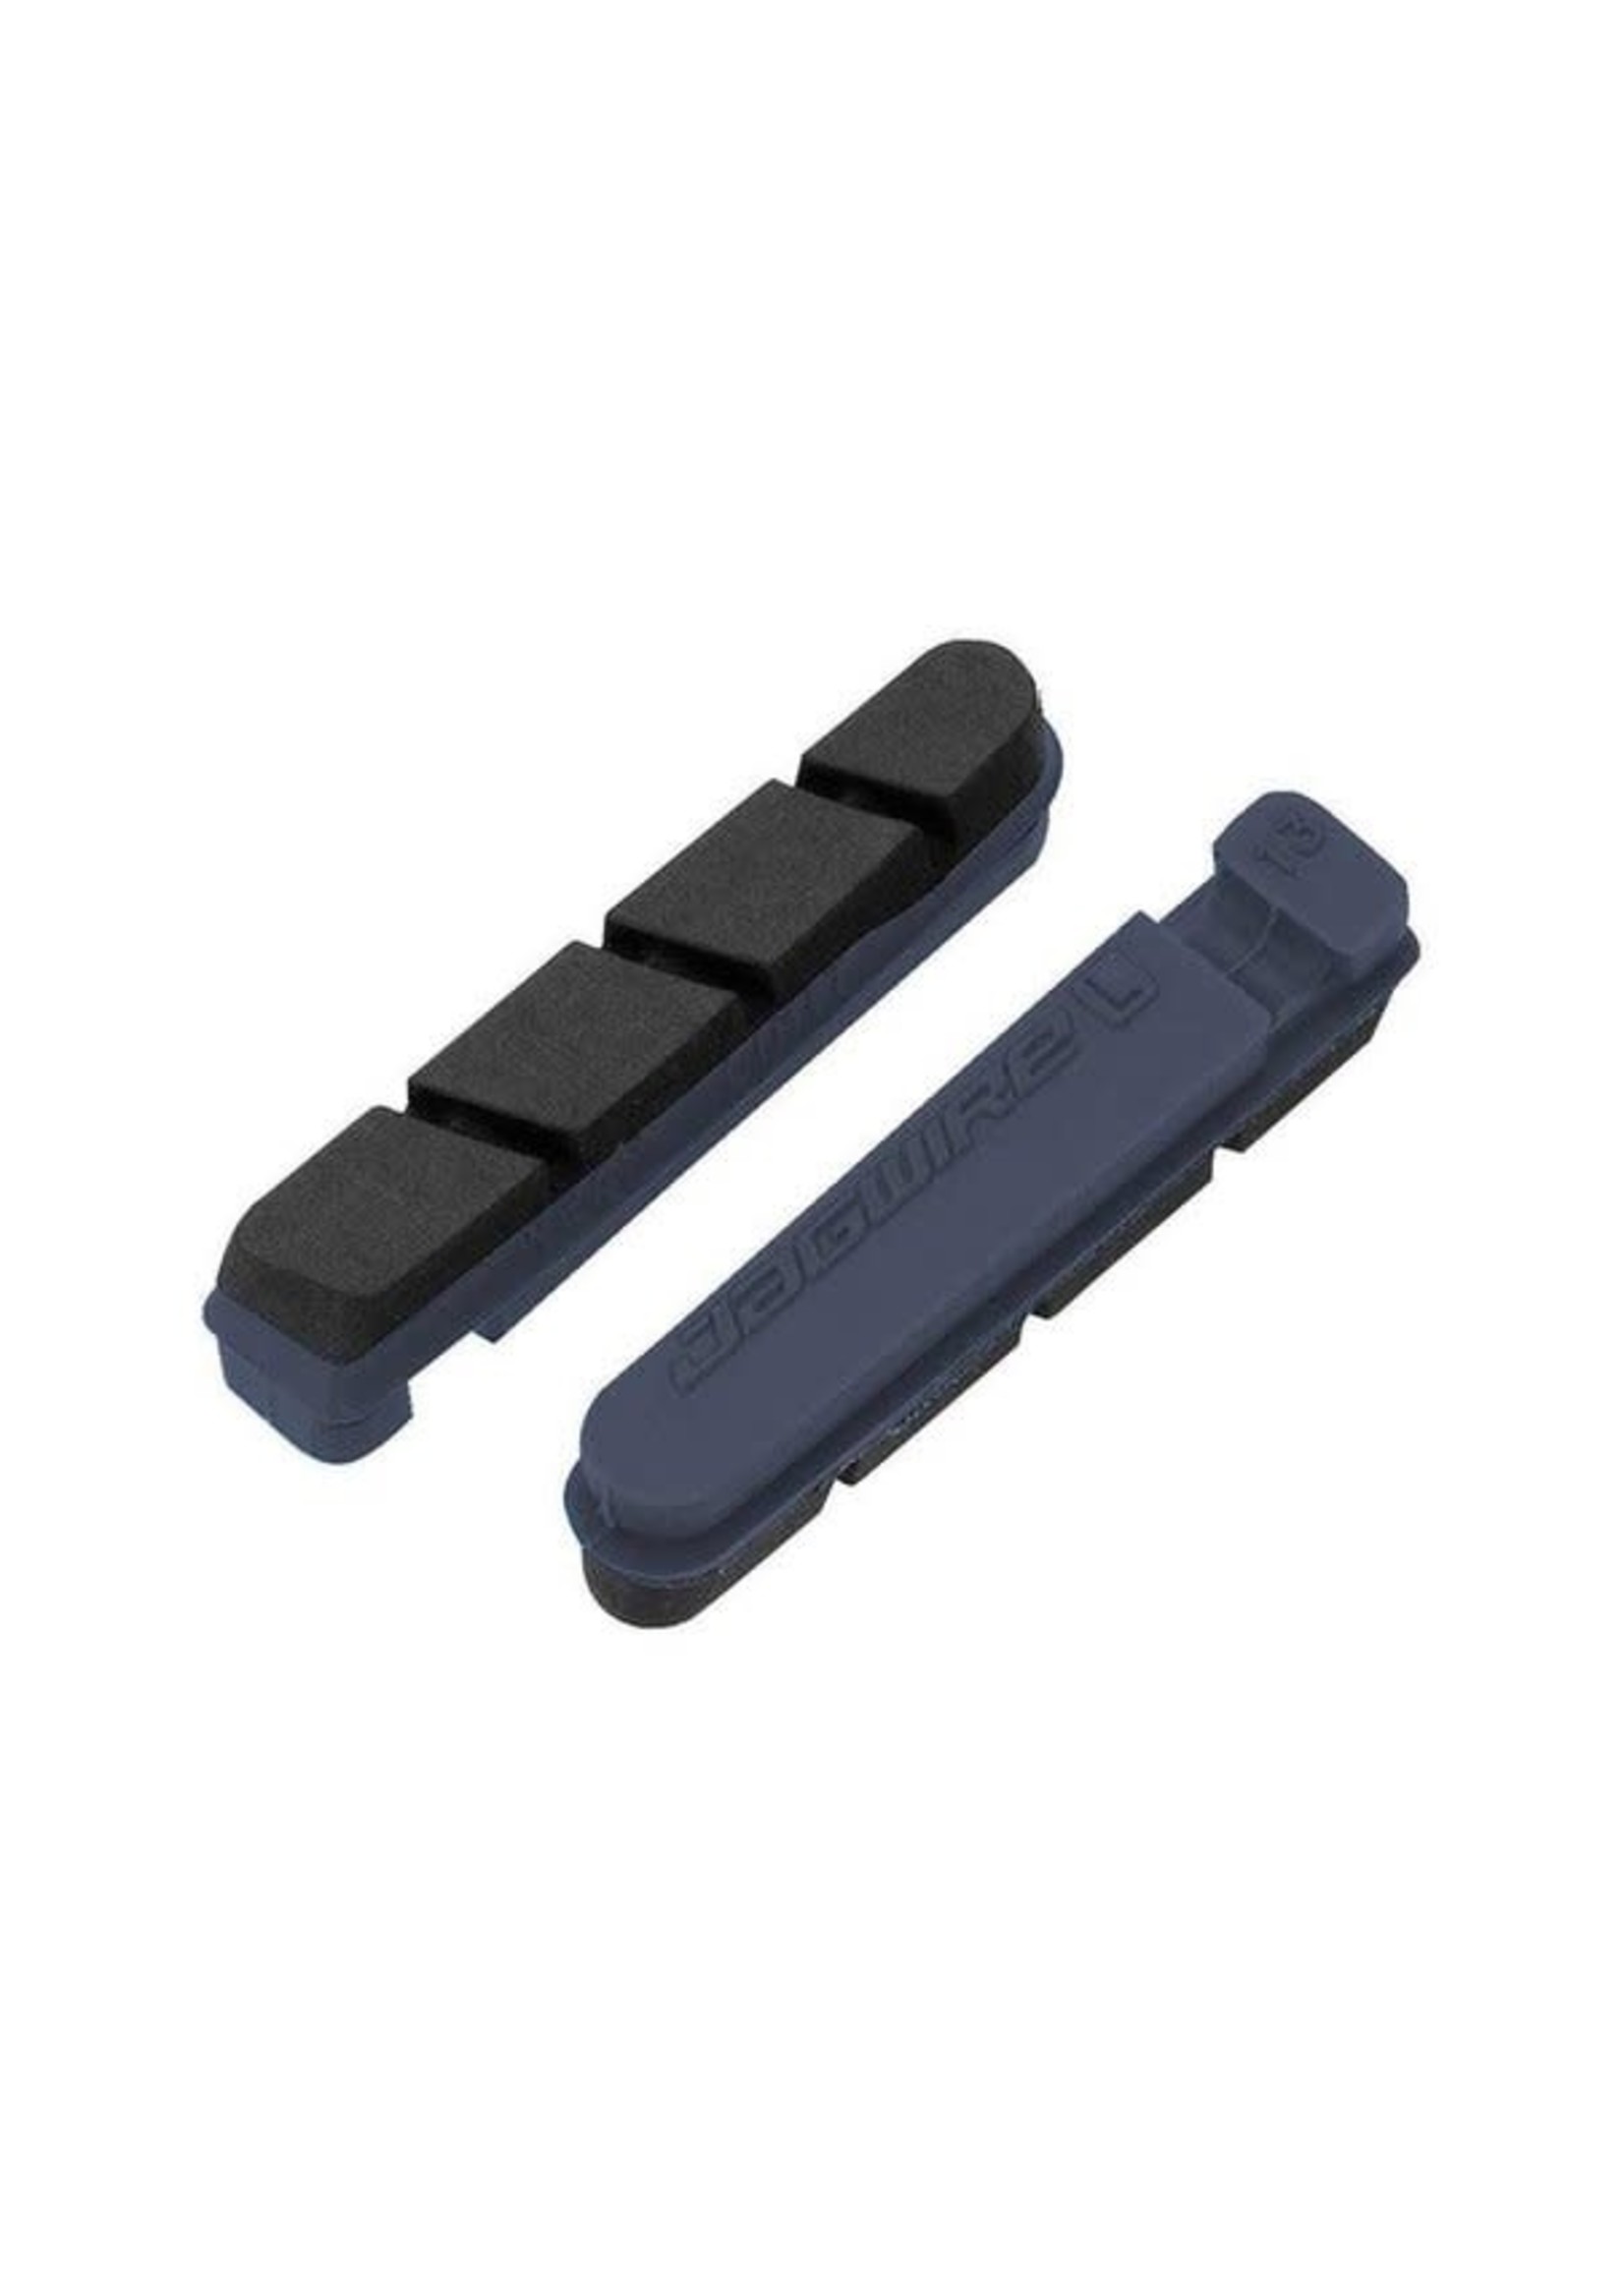 JAGWIRE Jagwire, Road Pro S, Road brake pad inserts (SRAM/Shimano), For Carbon Rims, Blue/Black, Pair